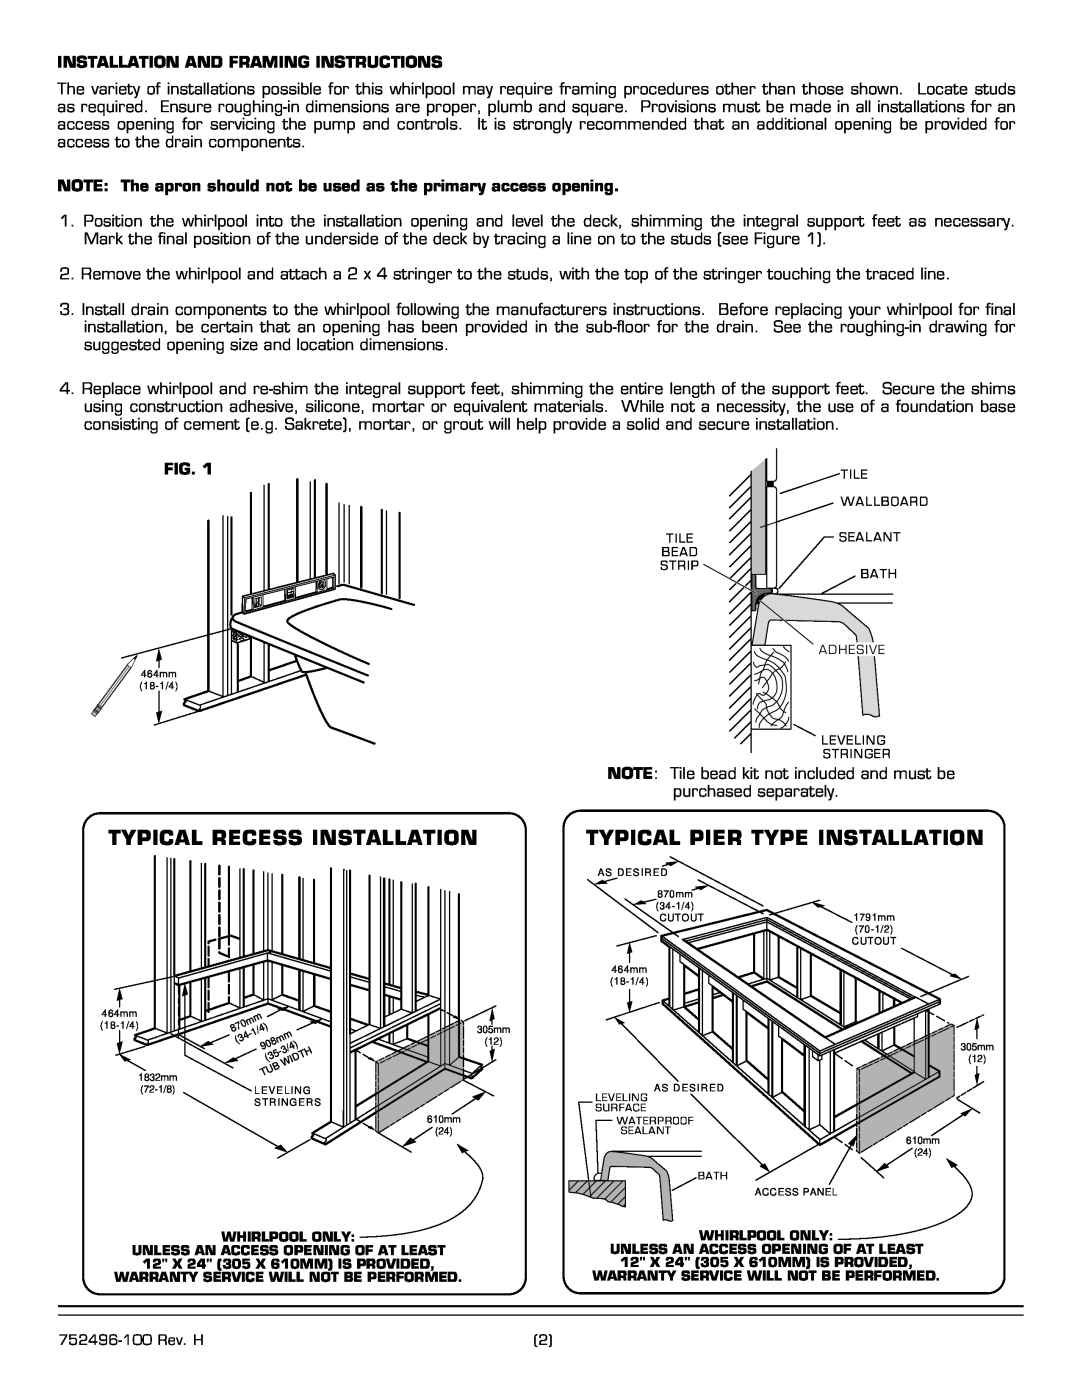 American Standard 2773.XXXW Series installation instructions Typical Recess Installation, Typical Pier Type Installation 